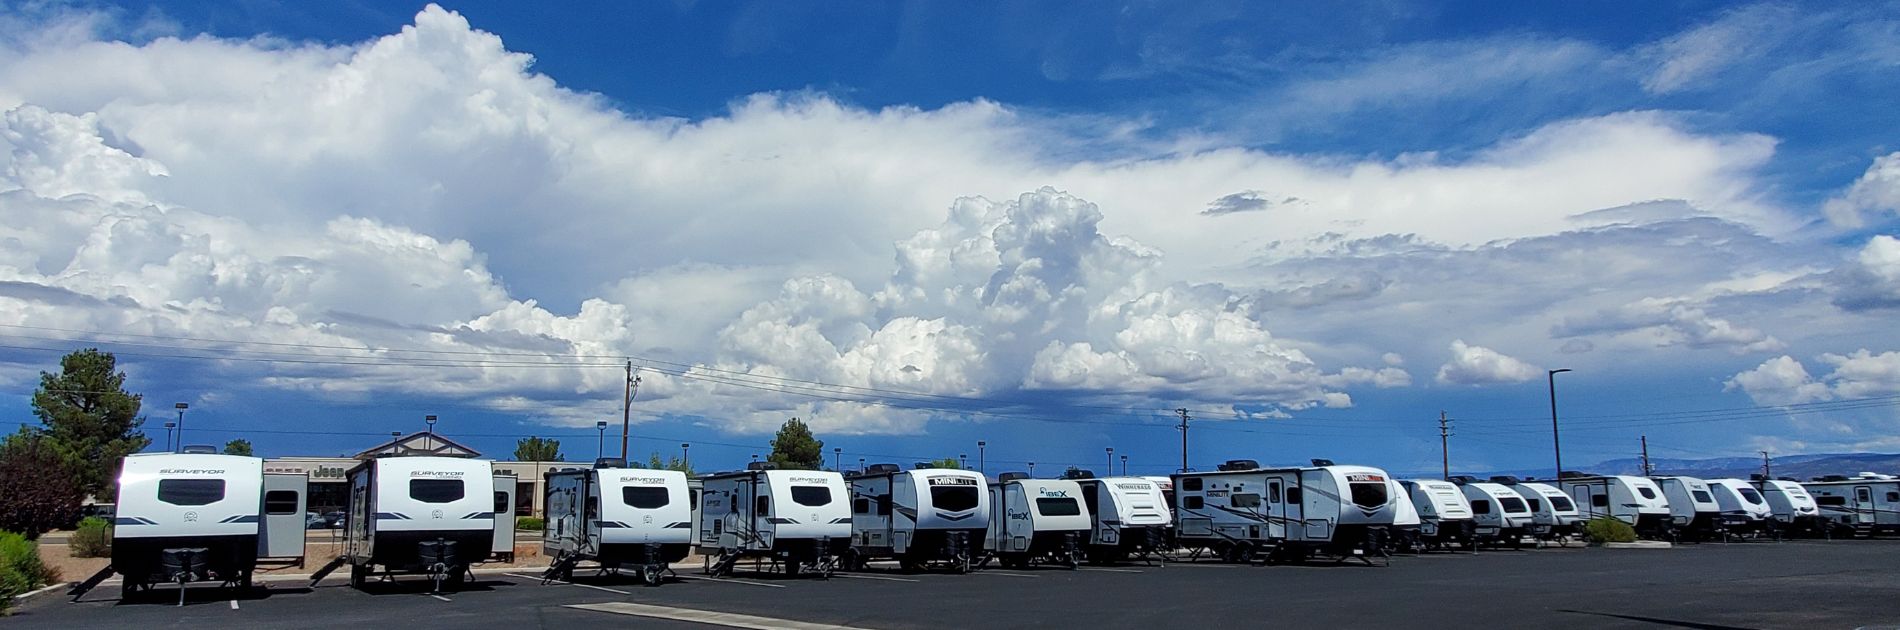 Leprechaun RVs for sale in Galpin Auto & RV, Dewey, Arizona